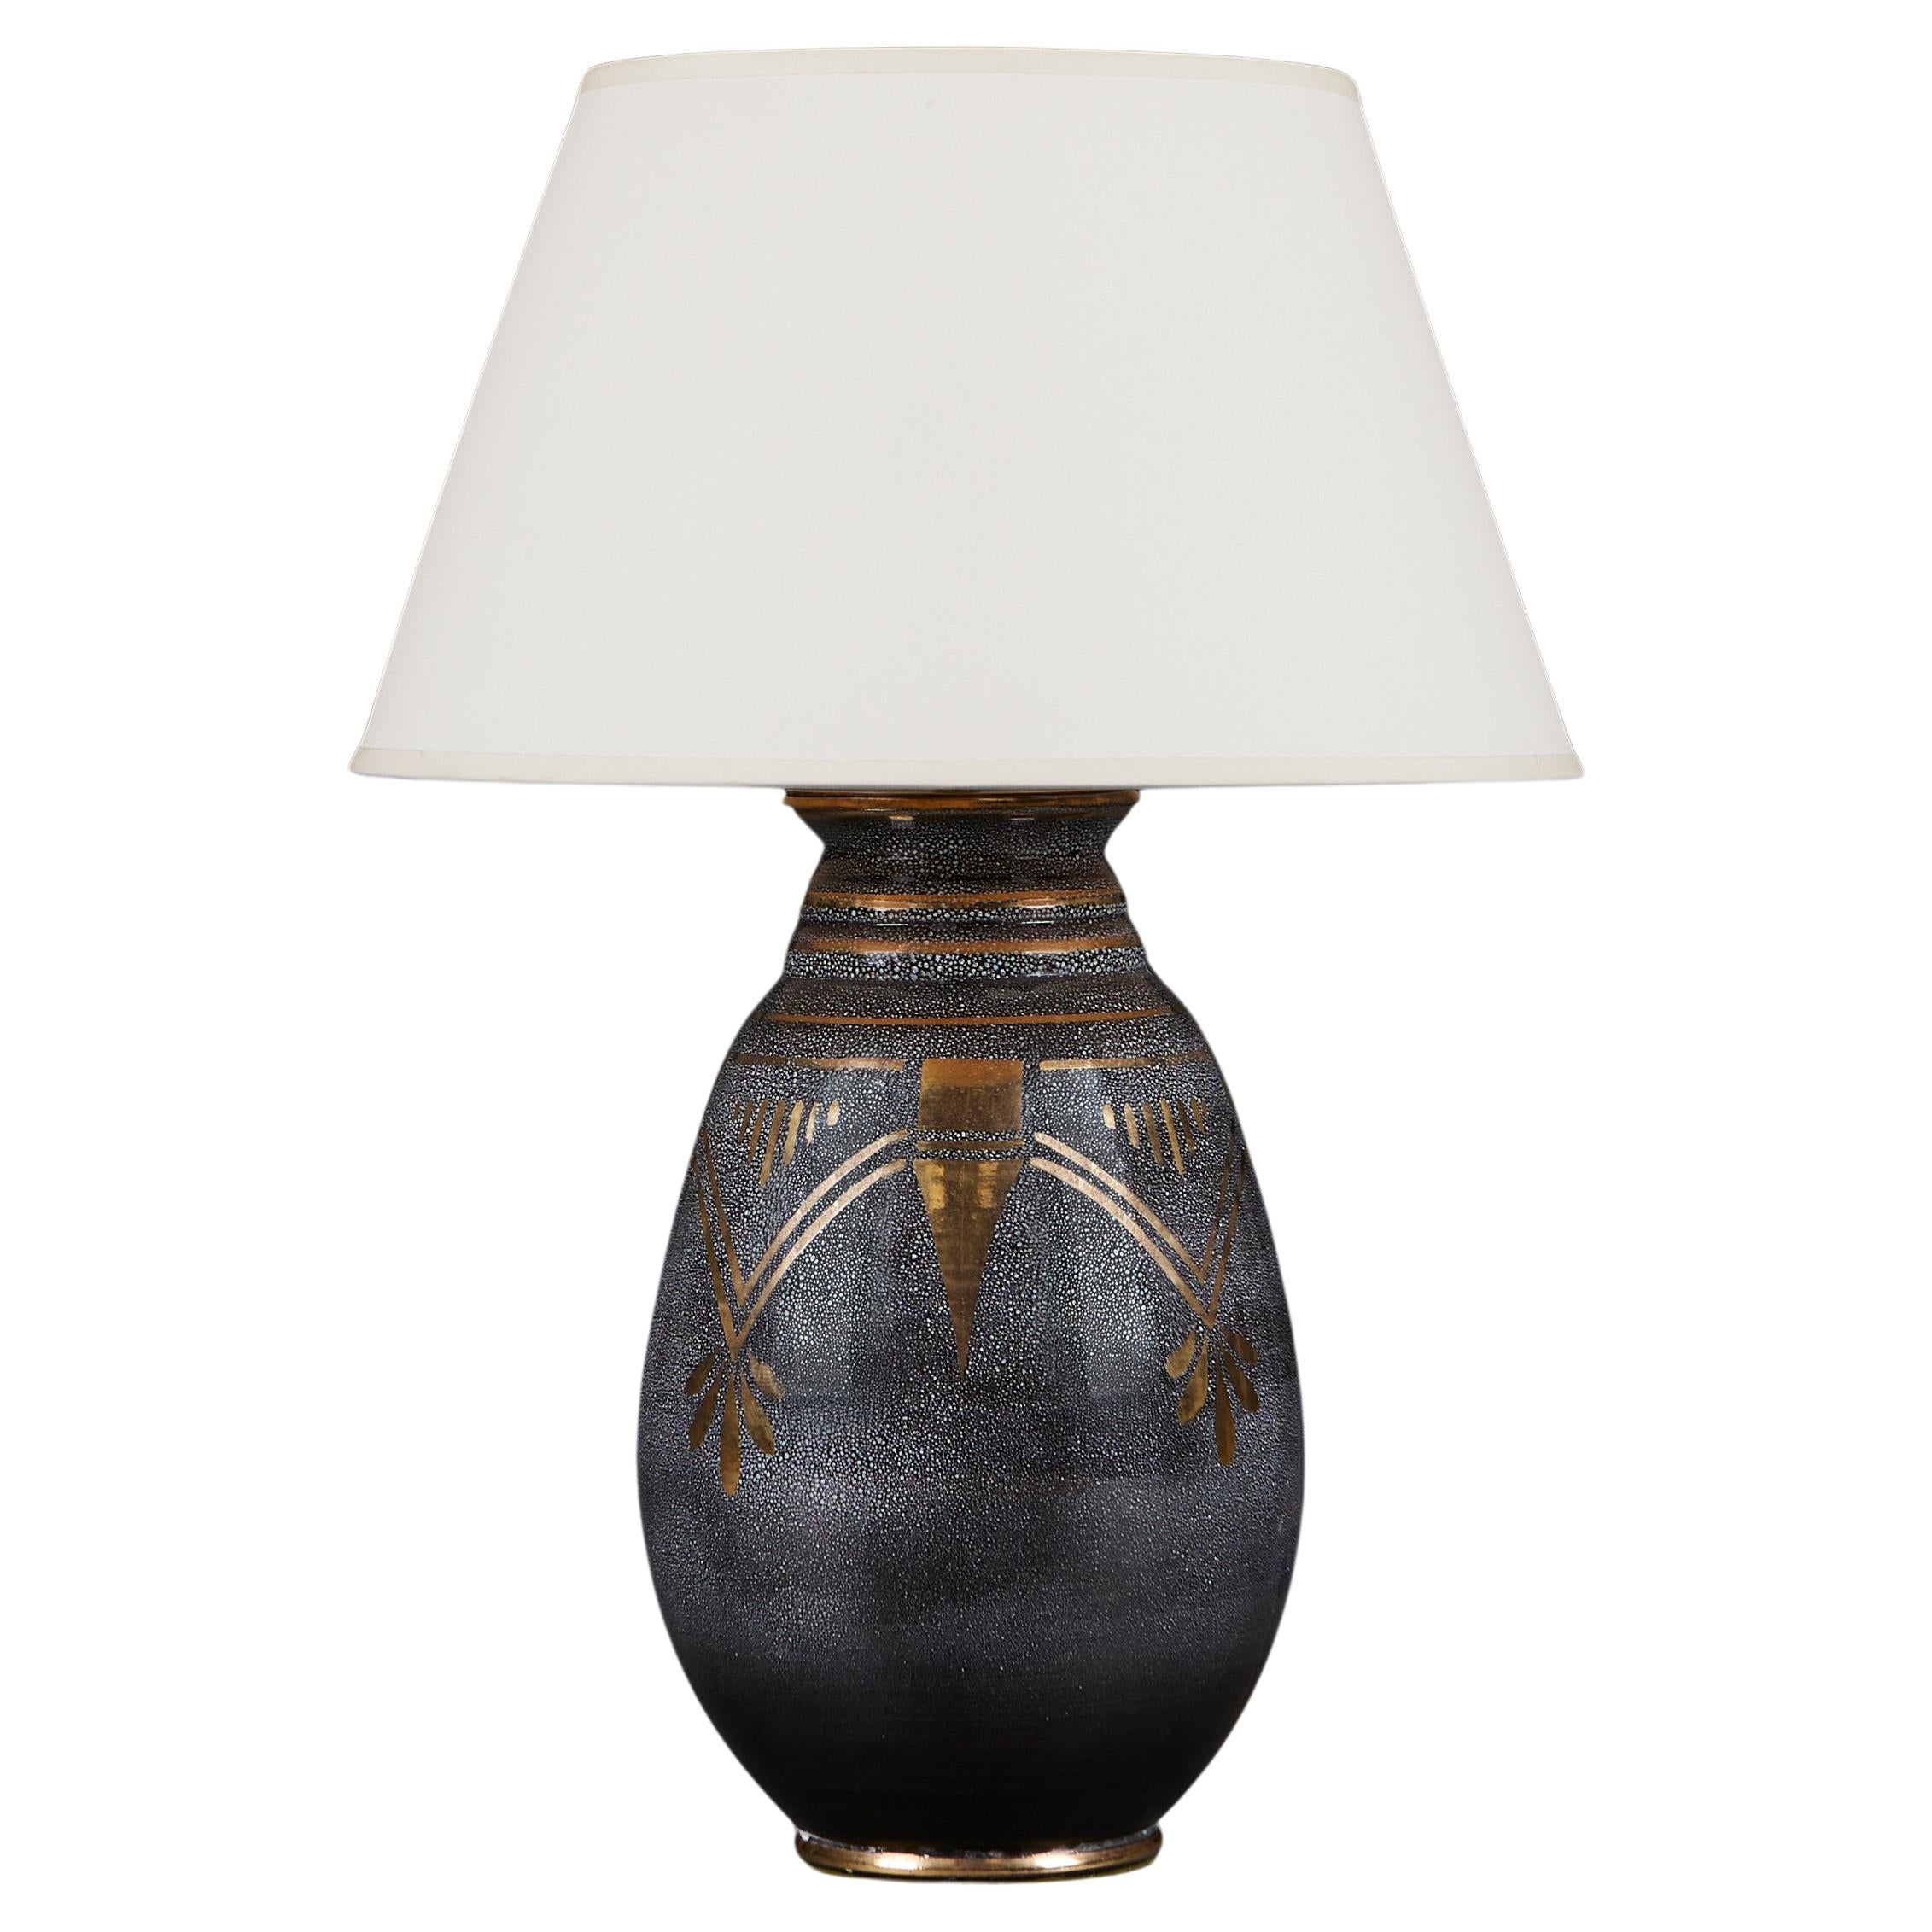 A Shagreen Glaze Art Deco Lamp For Sale